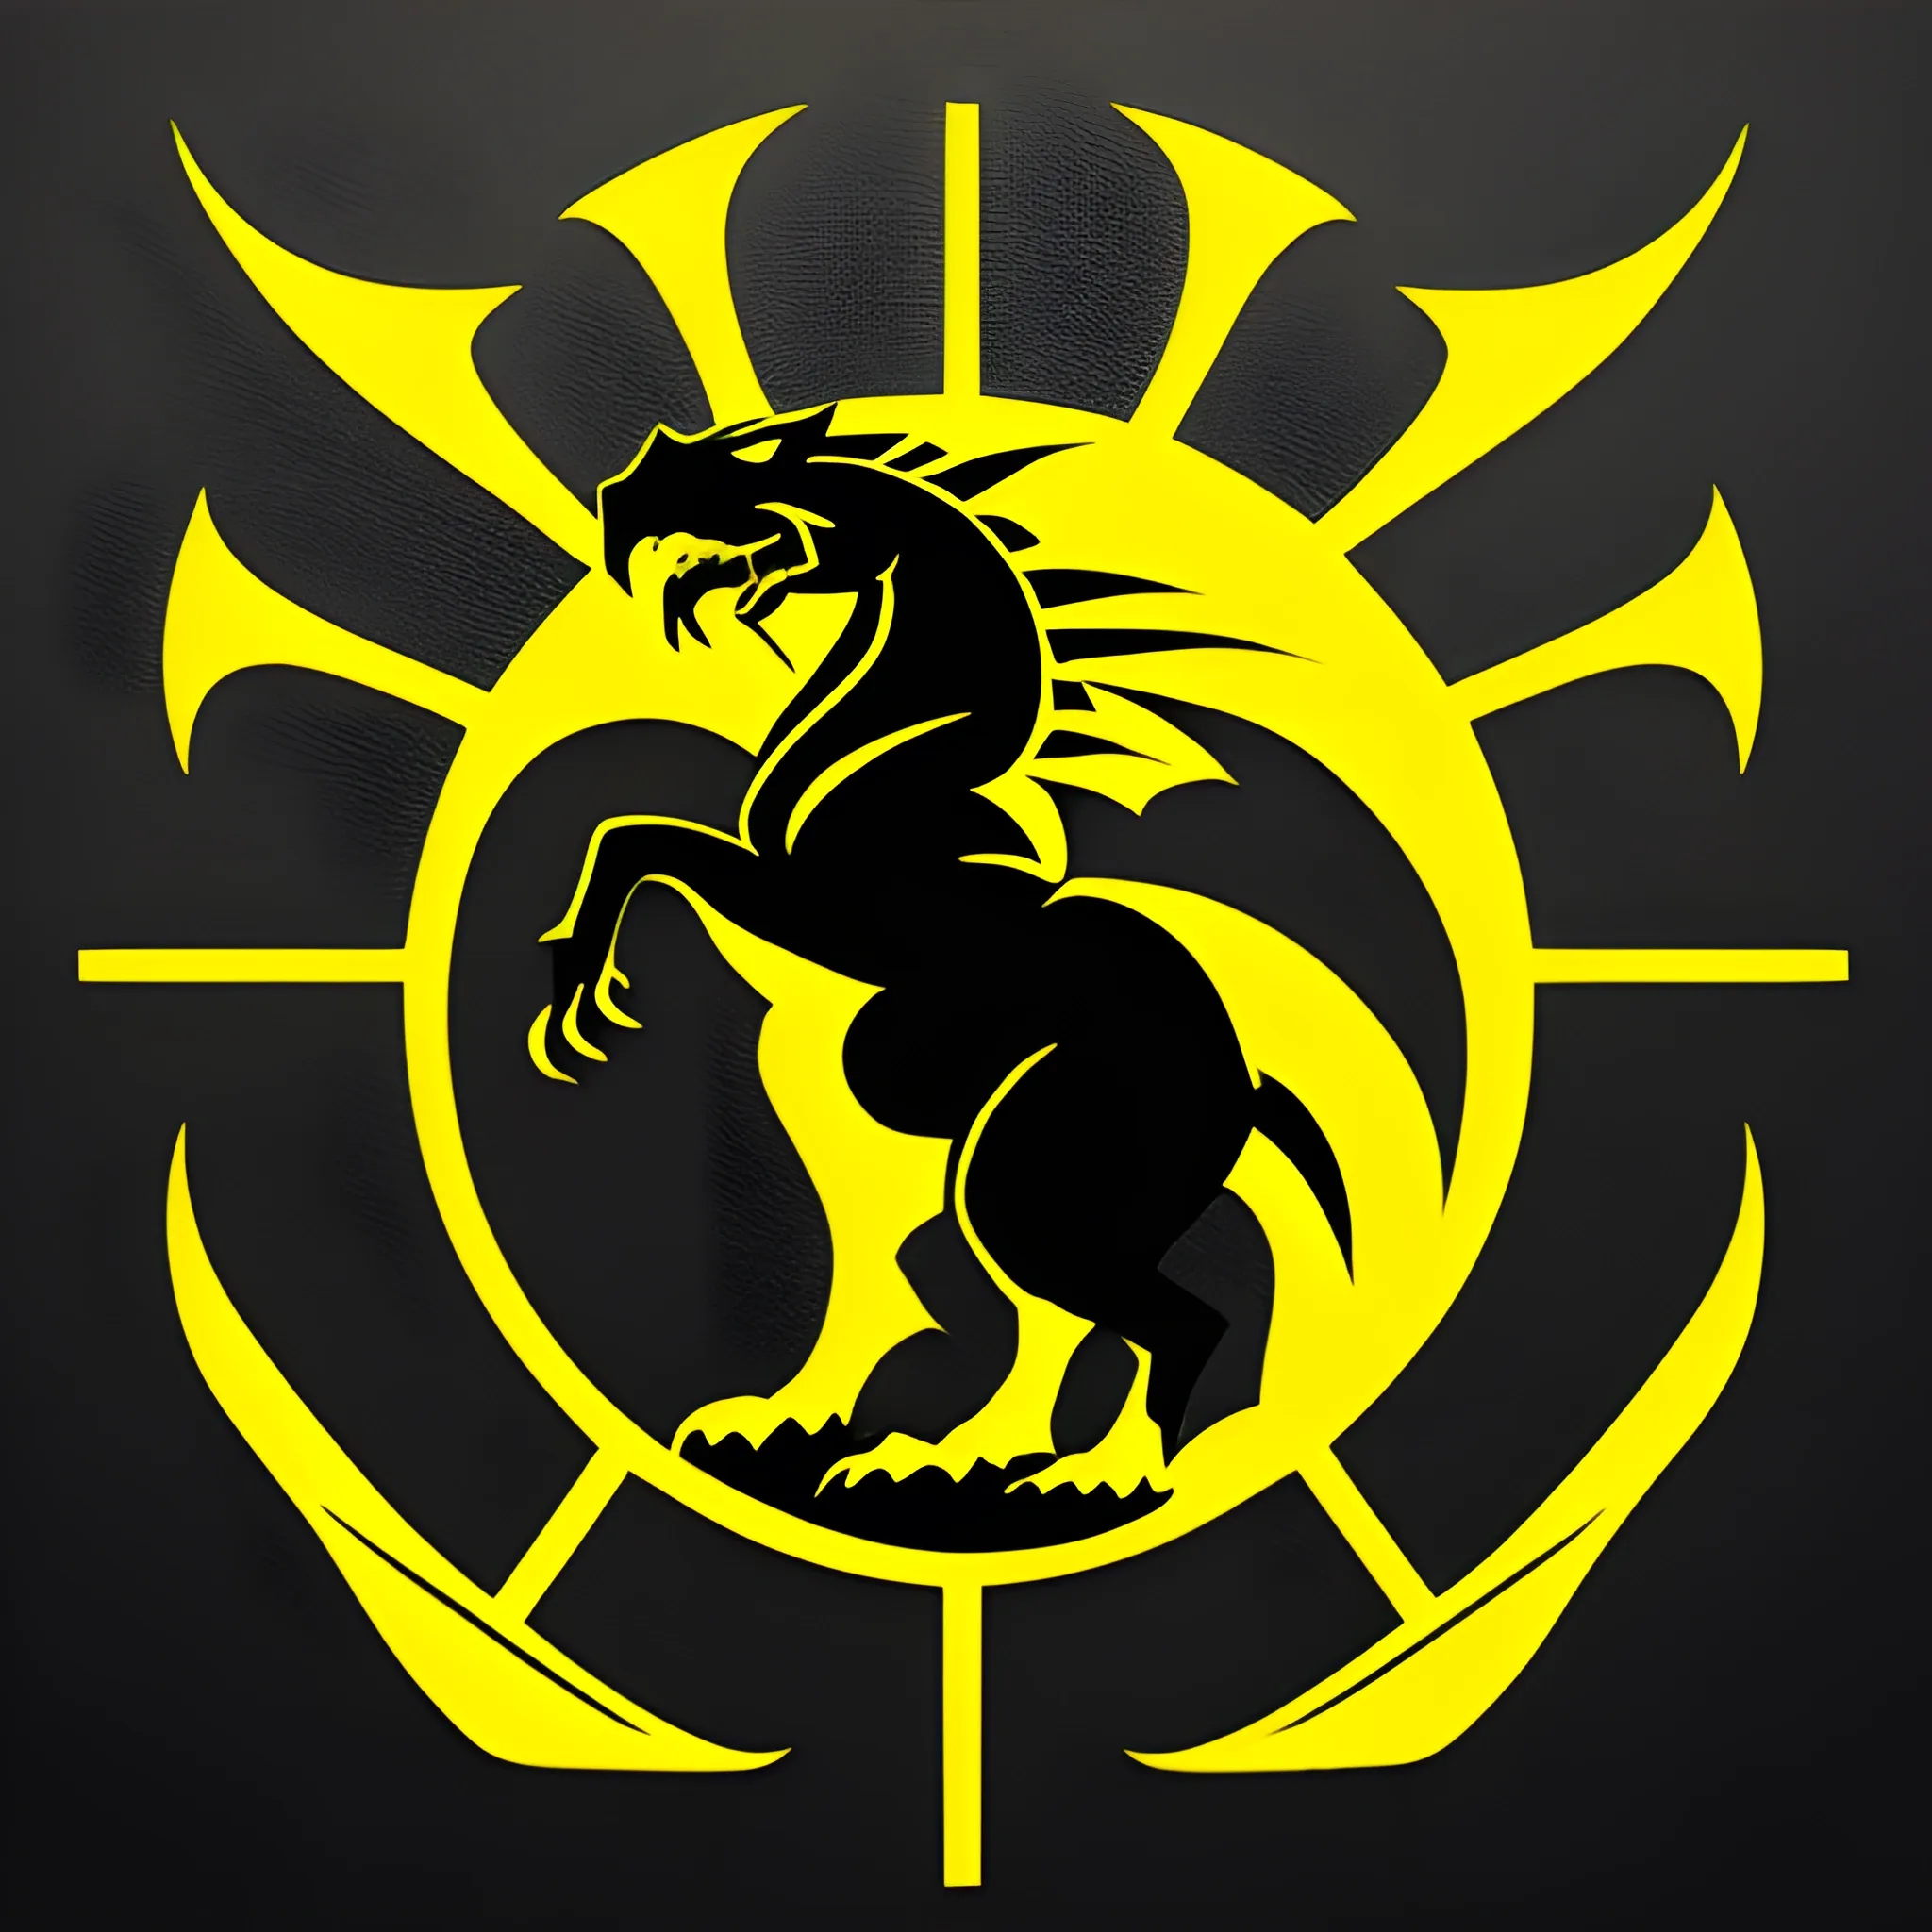 drakkar logo on the black background